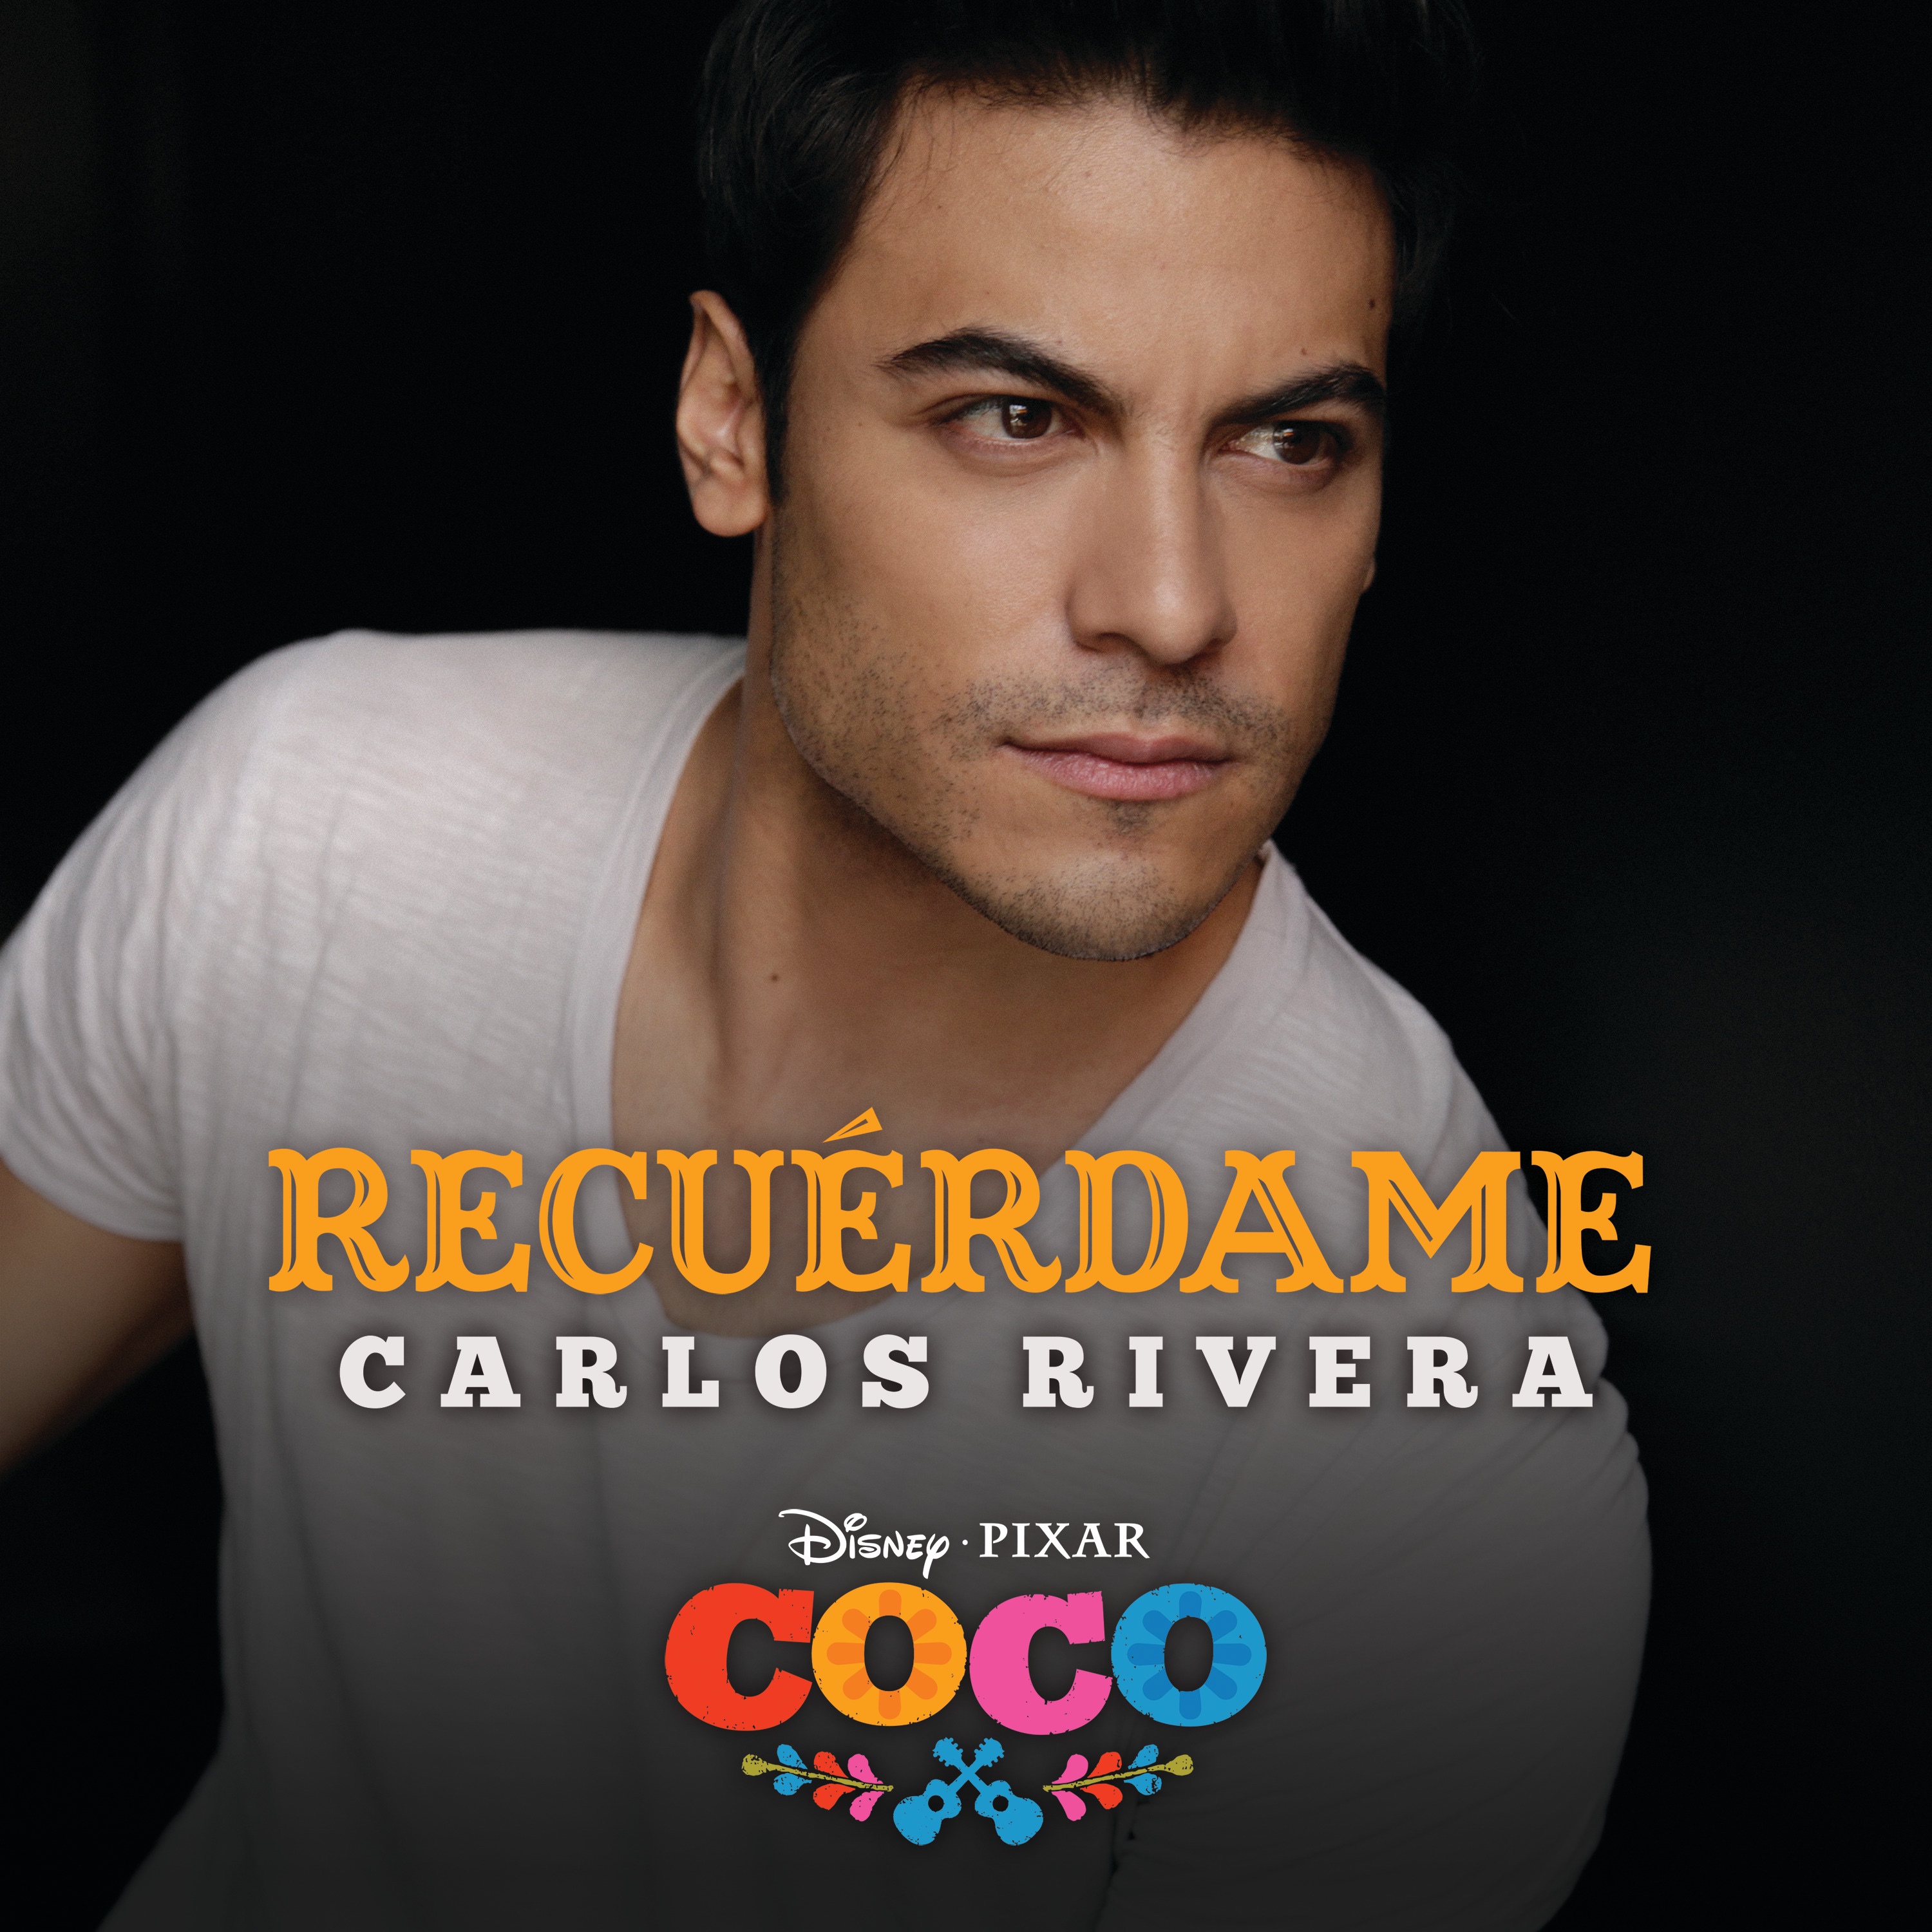 Carlos rivera coco